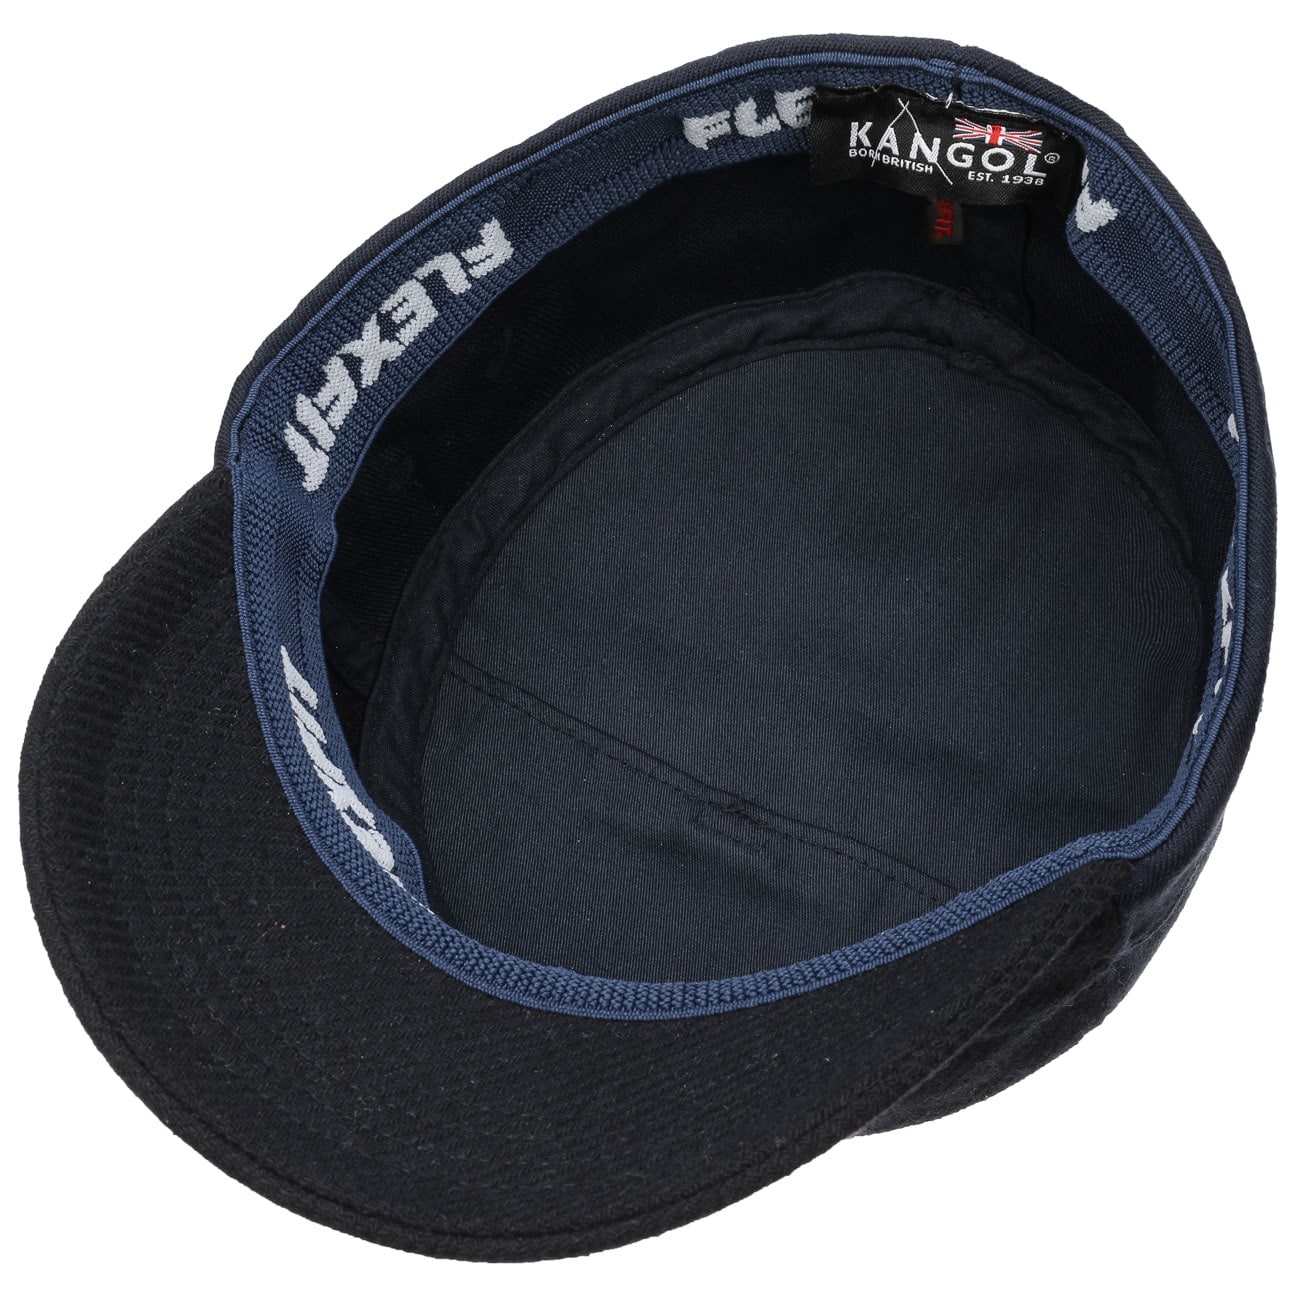 Kangol Cap Army Flexfit by Textured